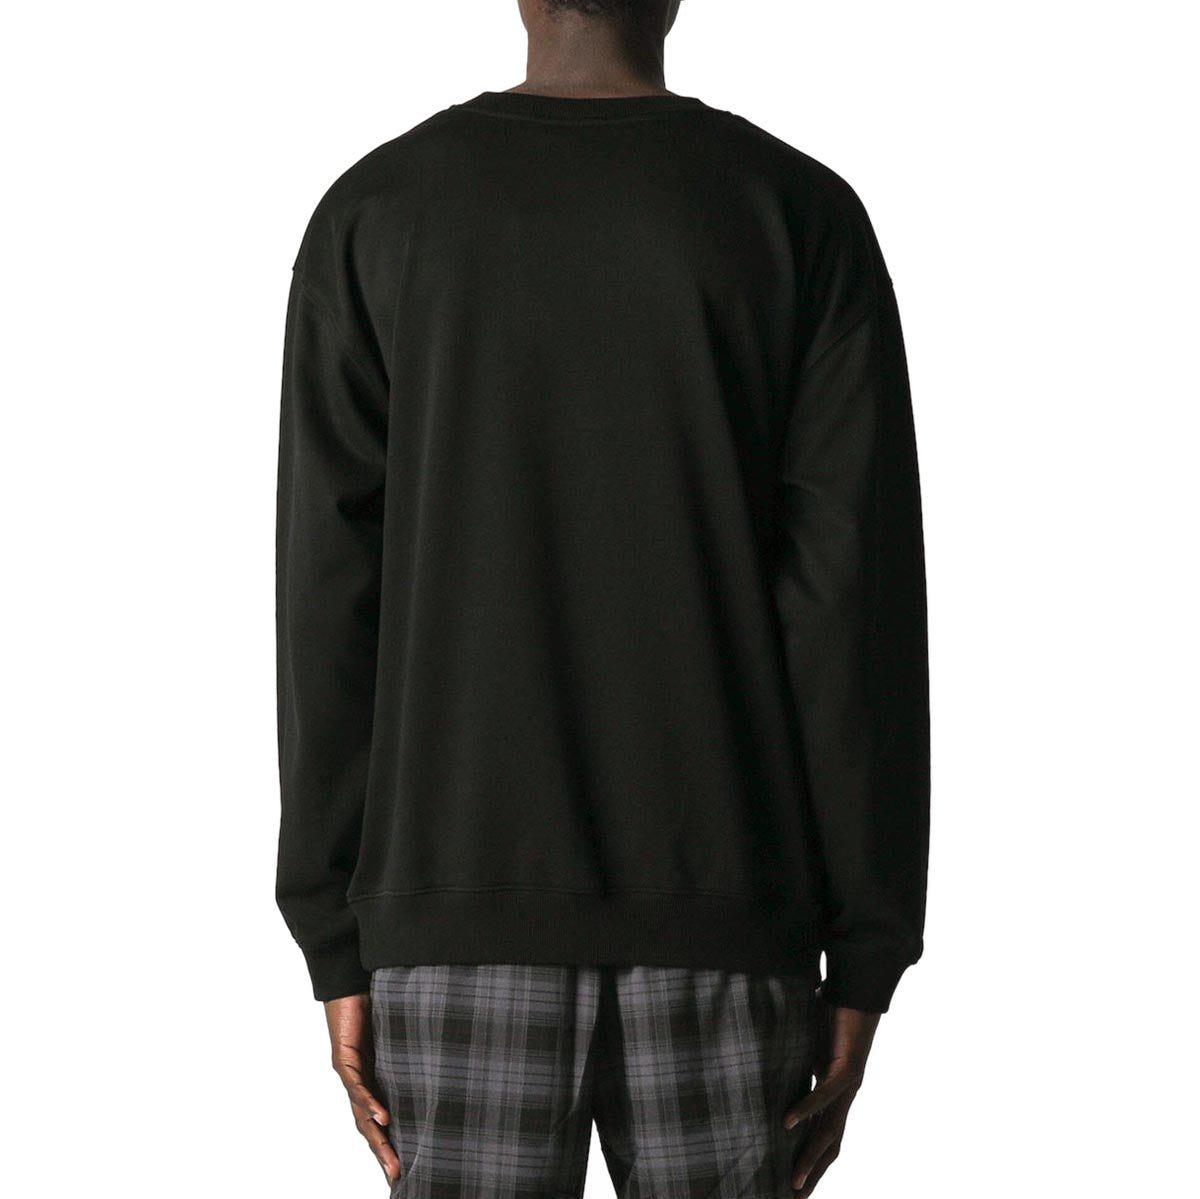 Former Shatter Crew Sweatshirt - Black image 2